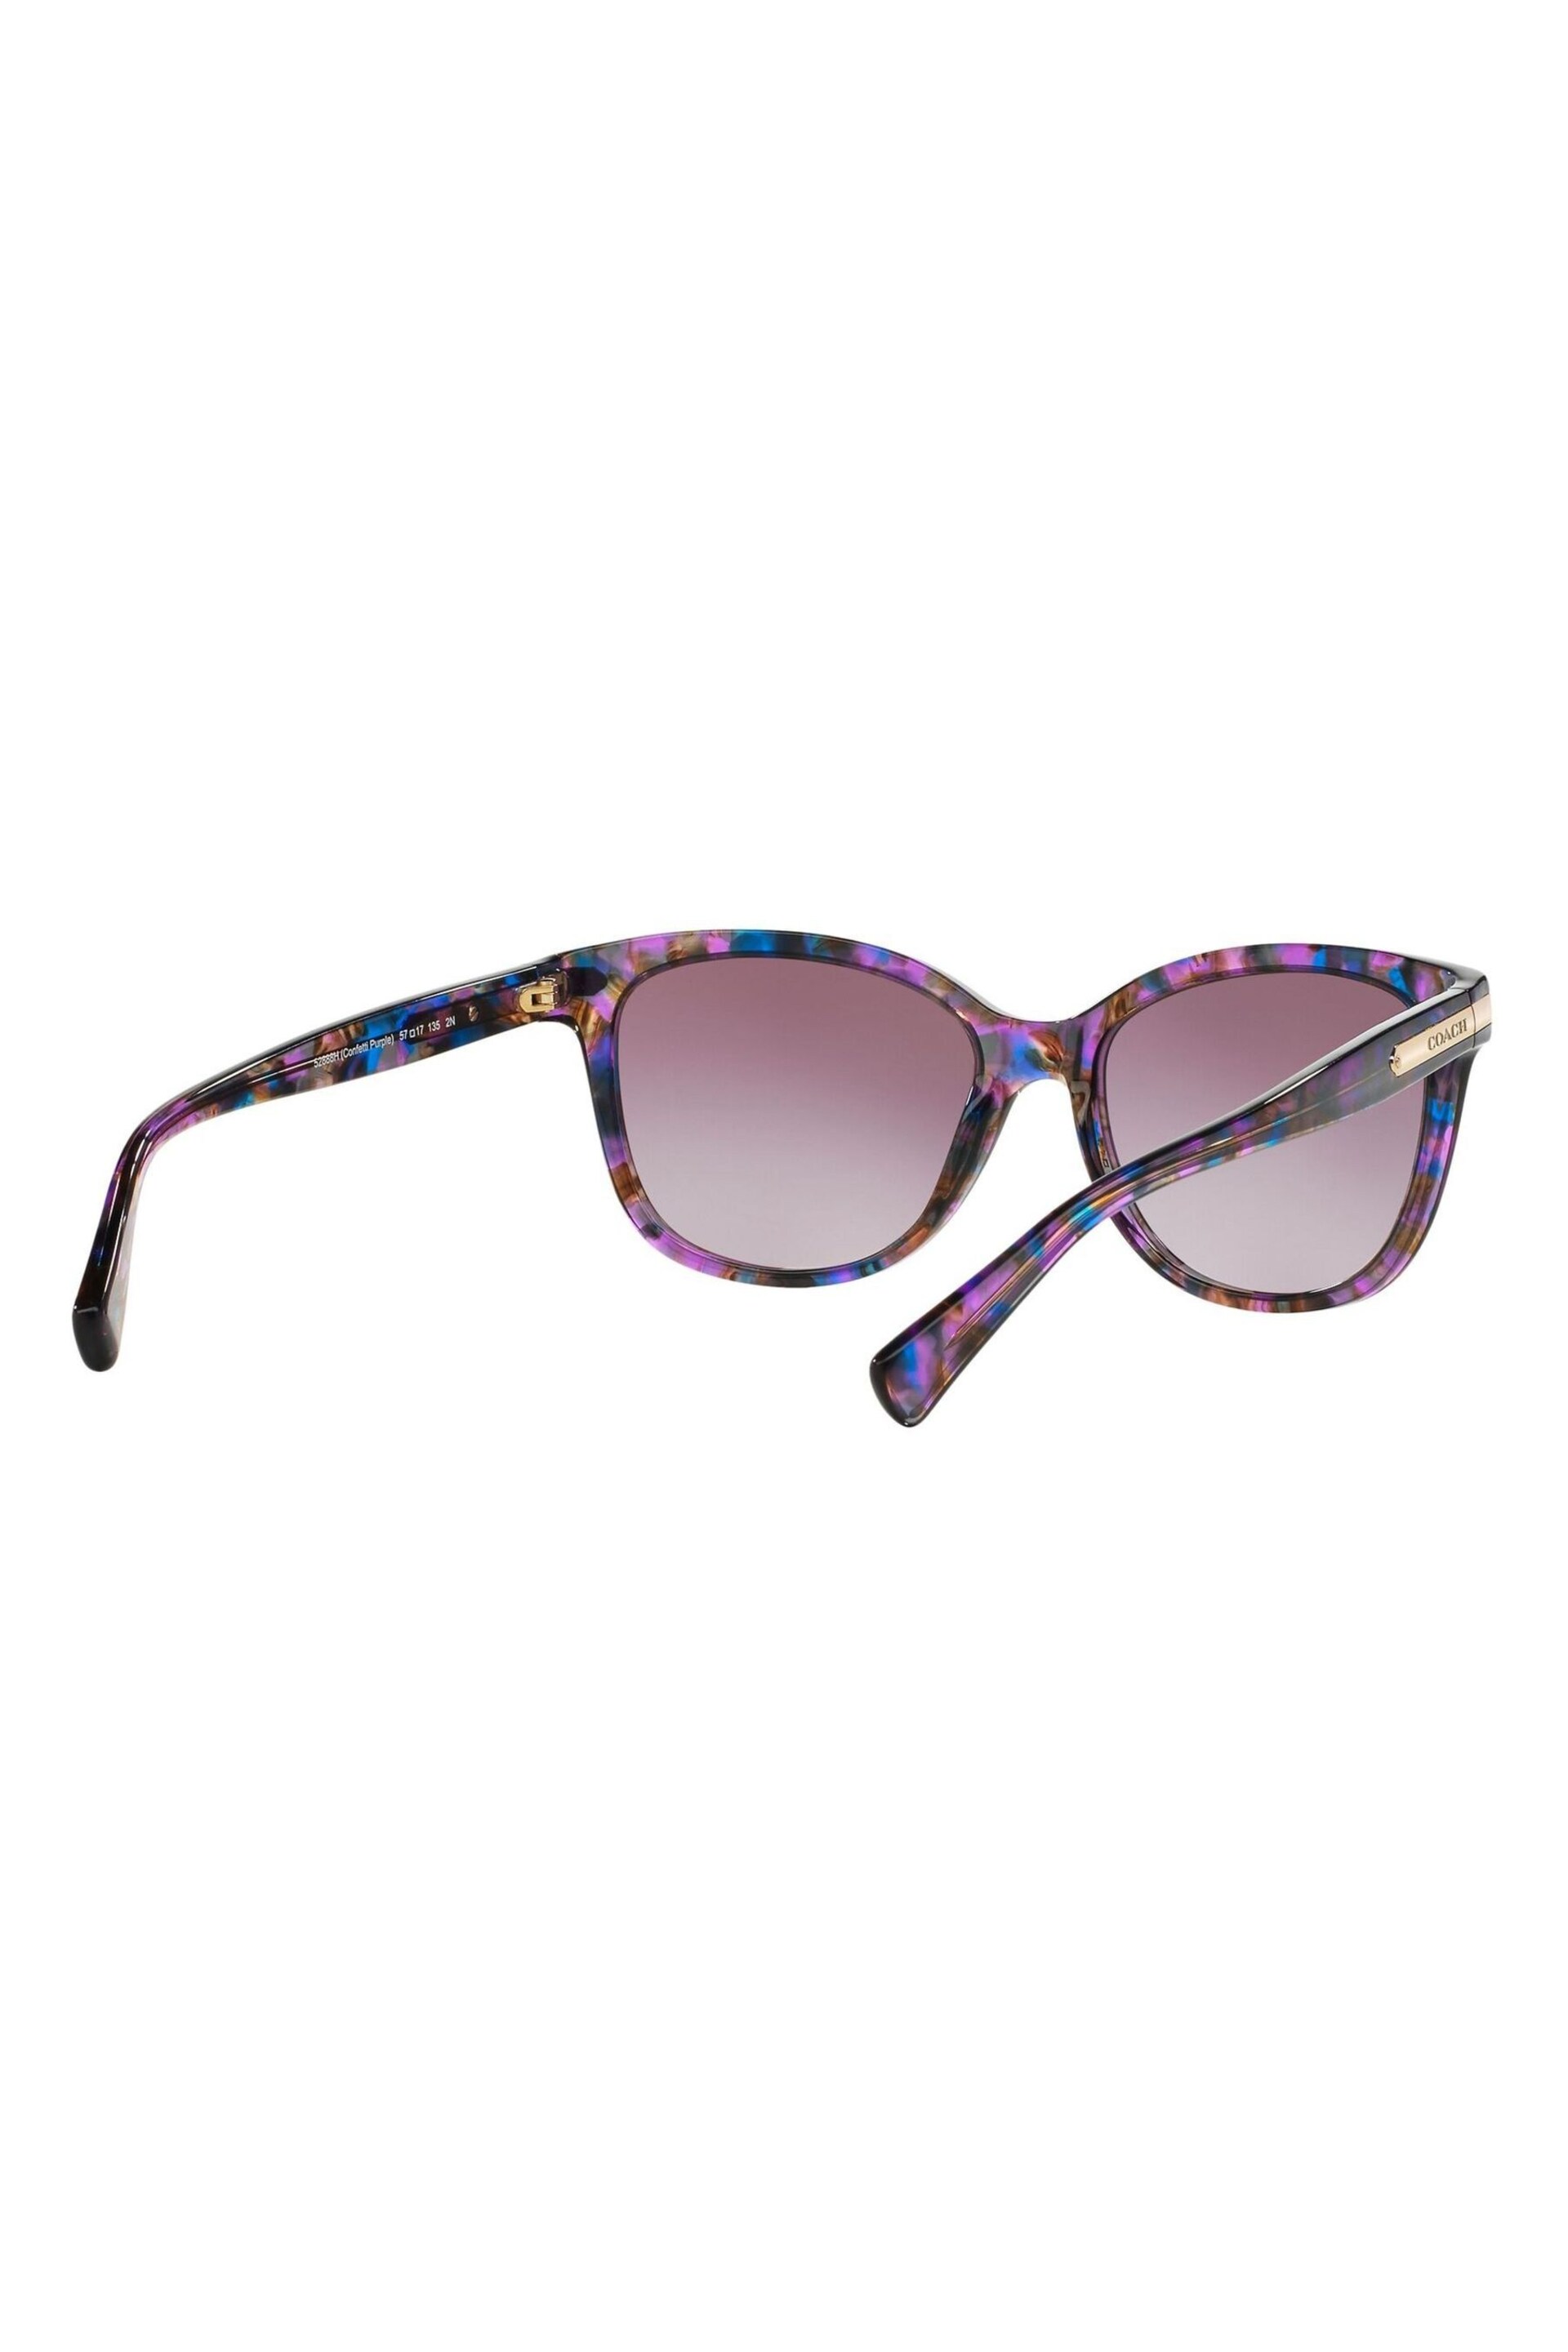 COACH Purple Sunglasses - Image 5 of 12